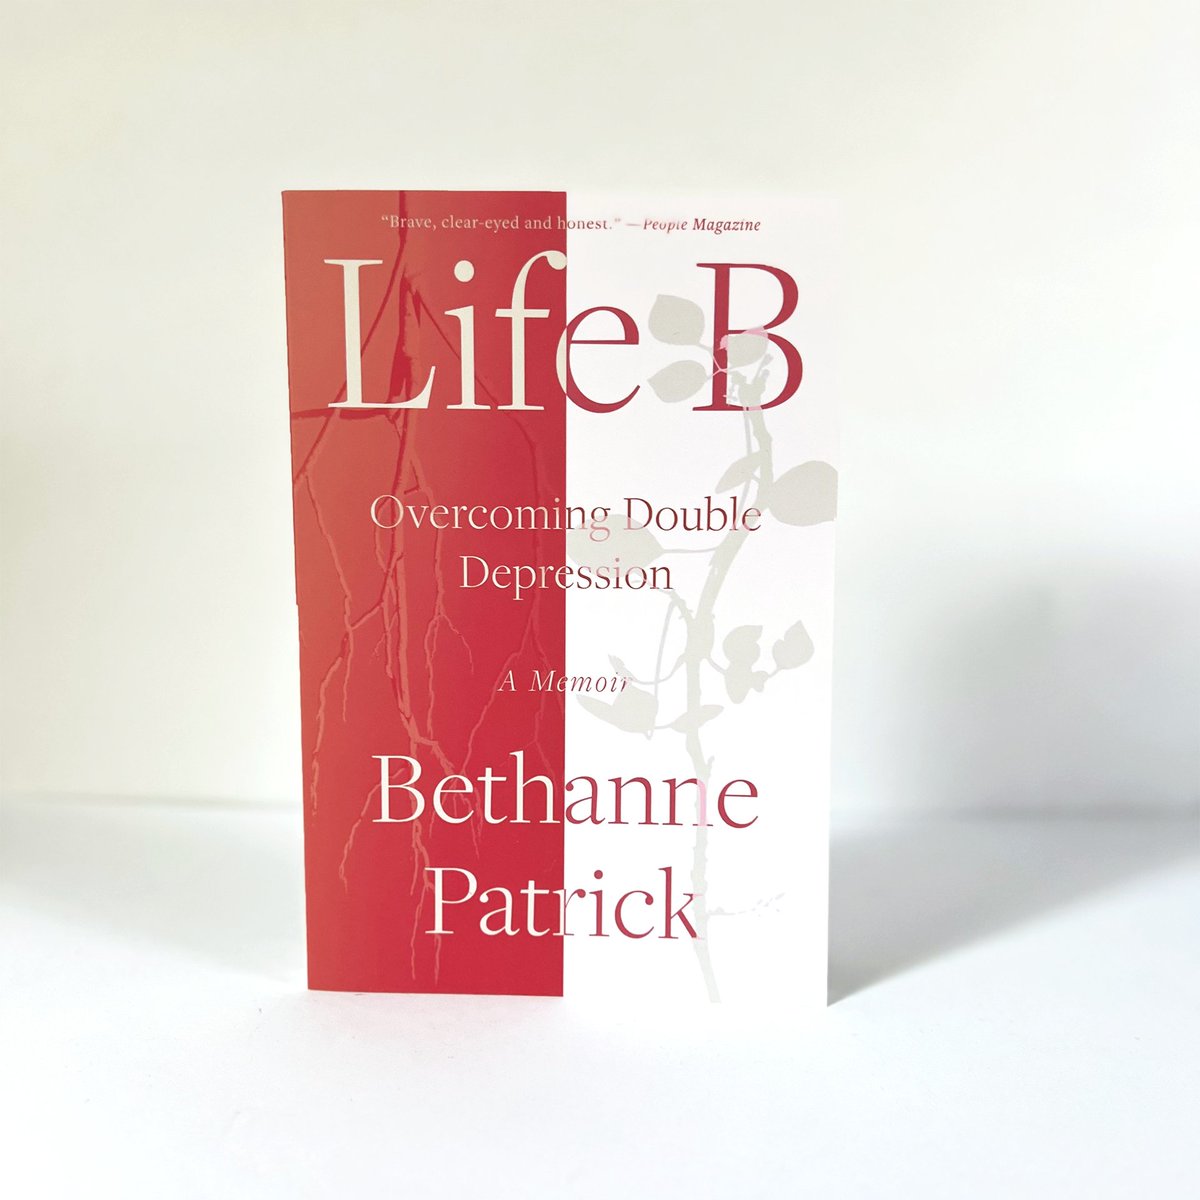 Life B hits shelves in paperback TOMORROW! ❤️